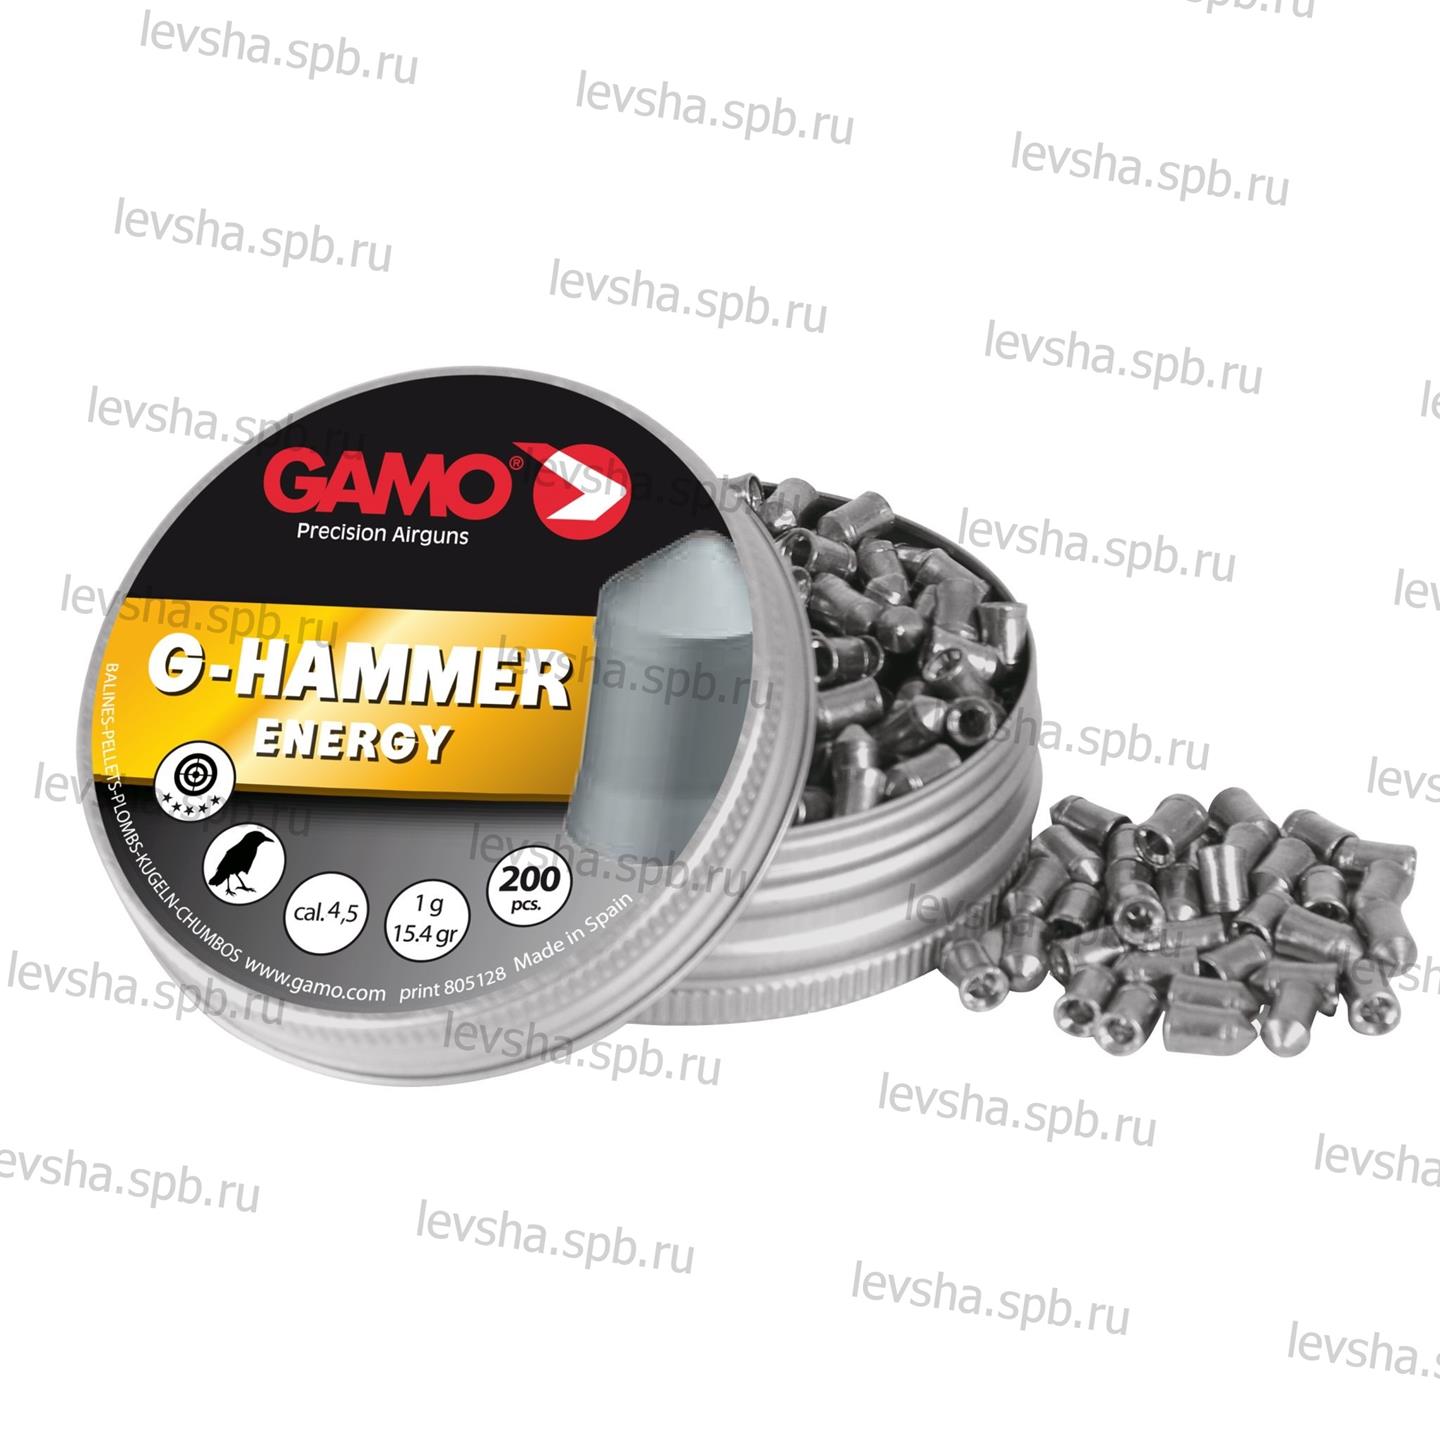 пули gamo g-hammer energy 4,5 мм 1.0гр.(200) фото